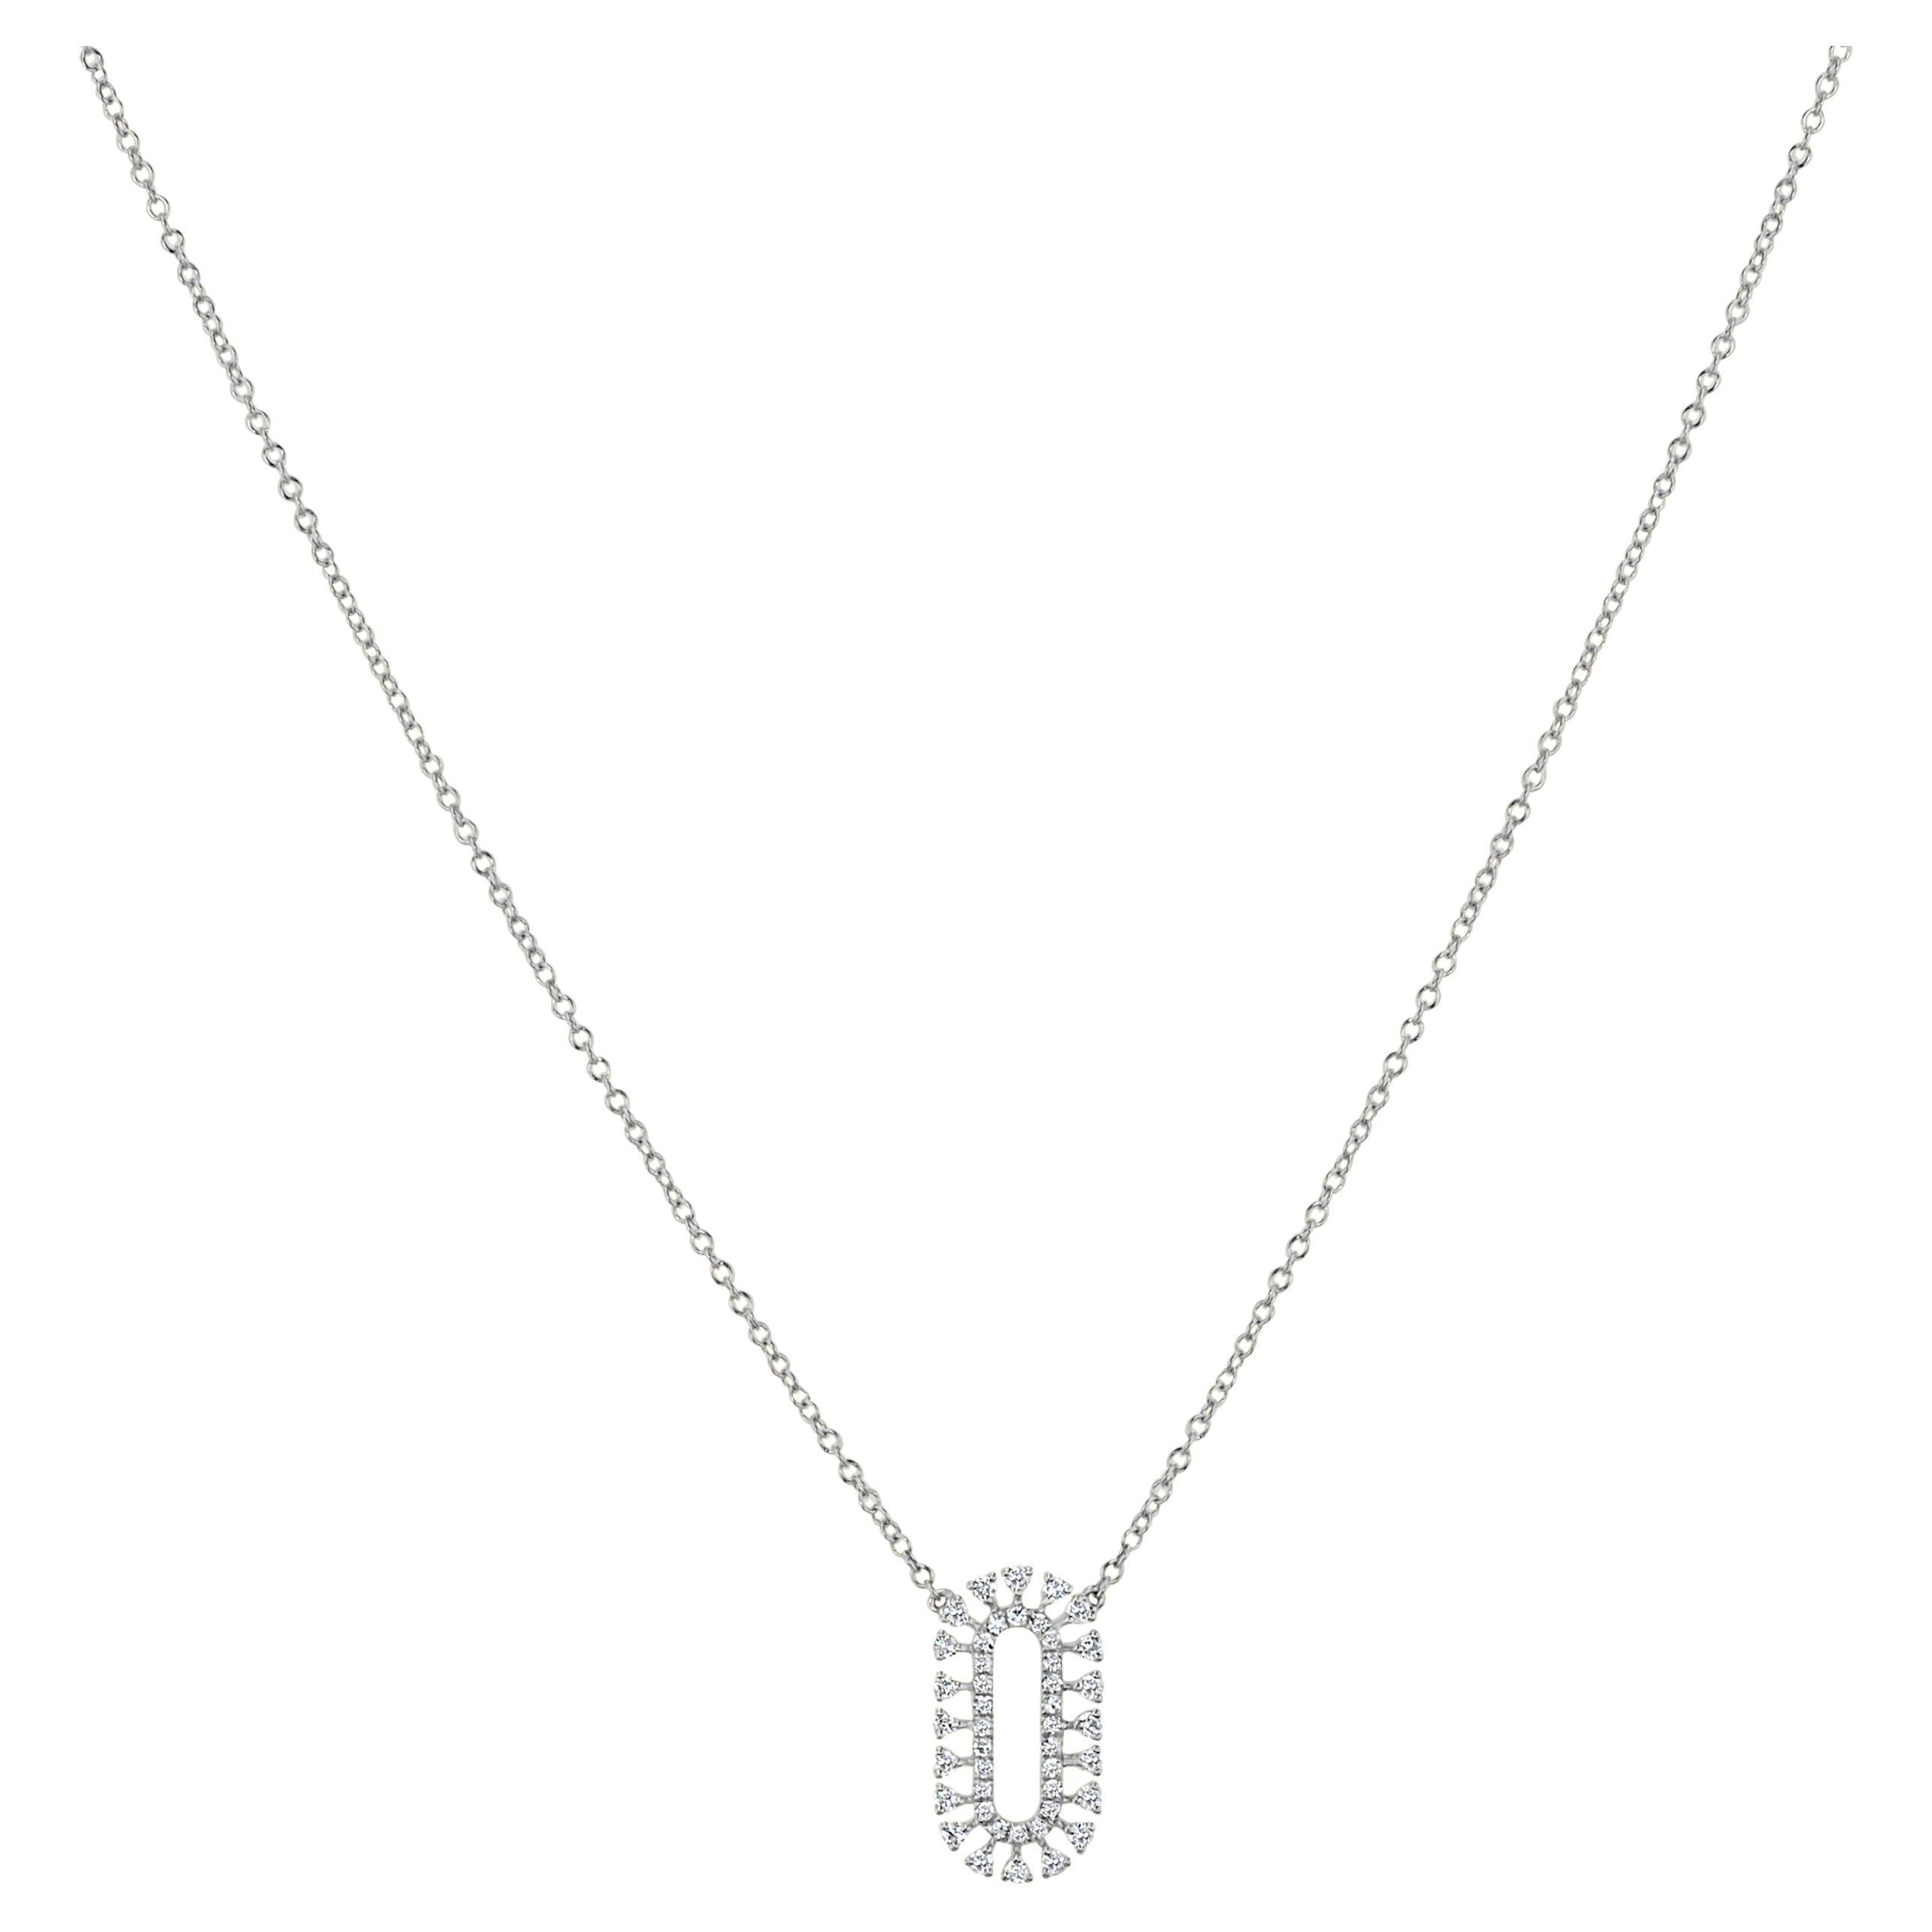 Luxle 0.24 Carat Diamond Pendant Necklace in 18k White Gold